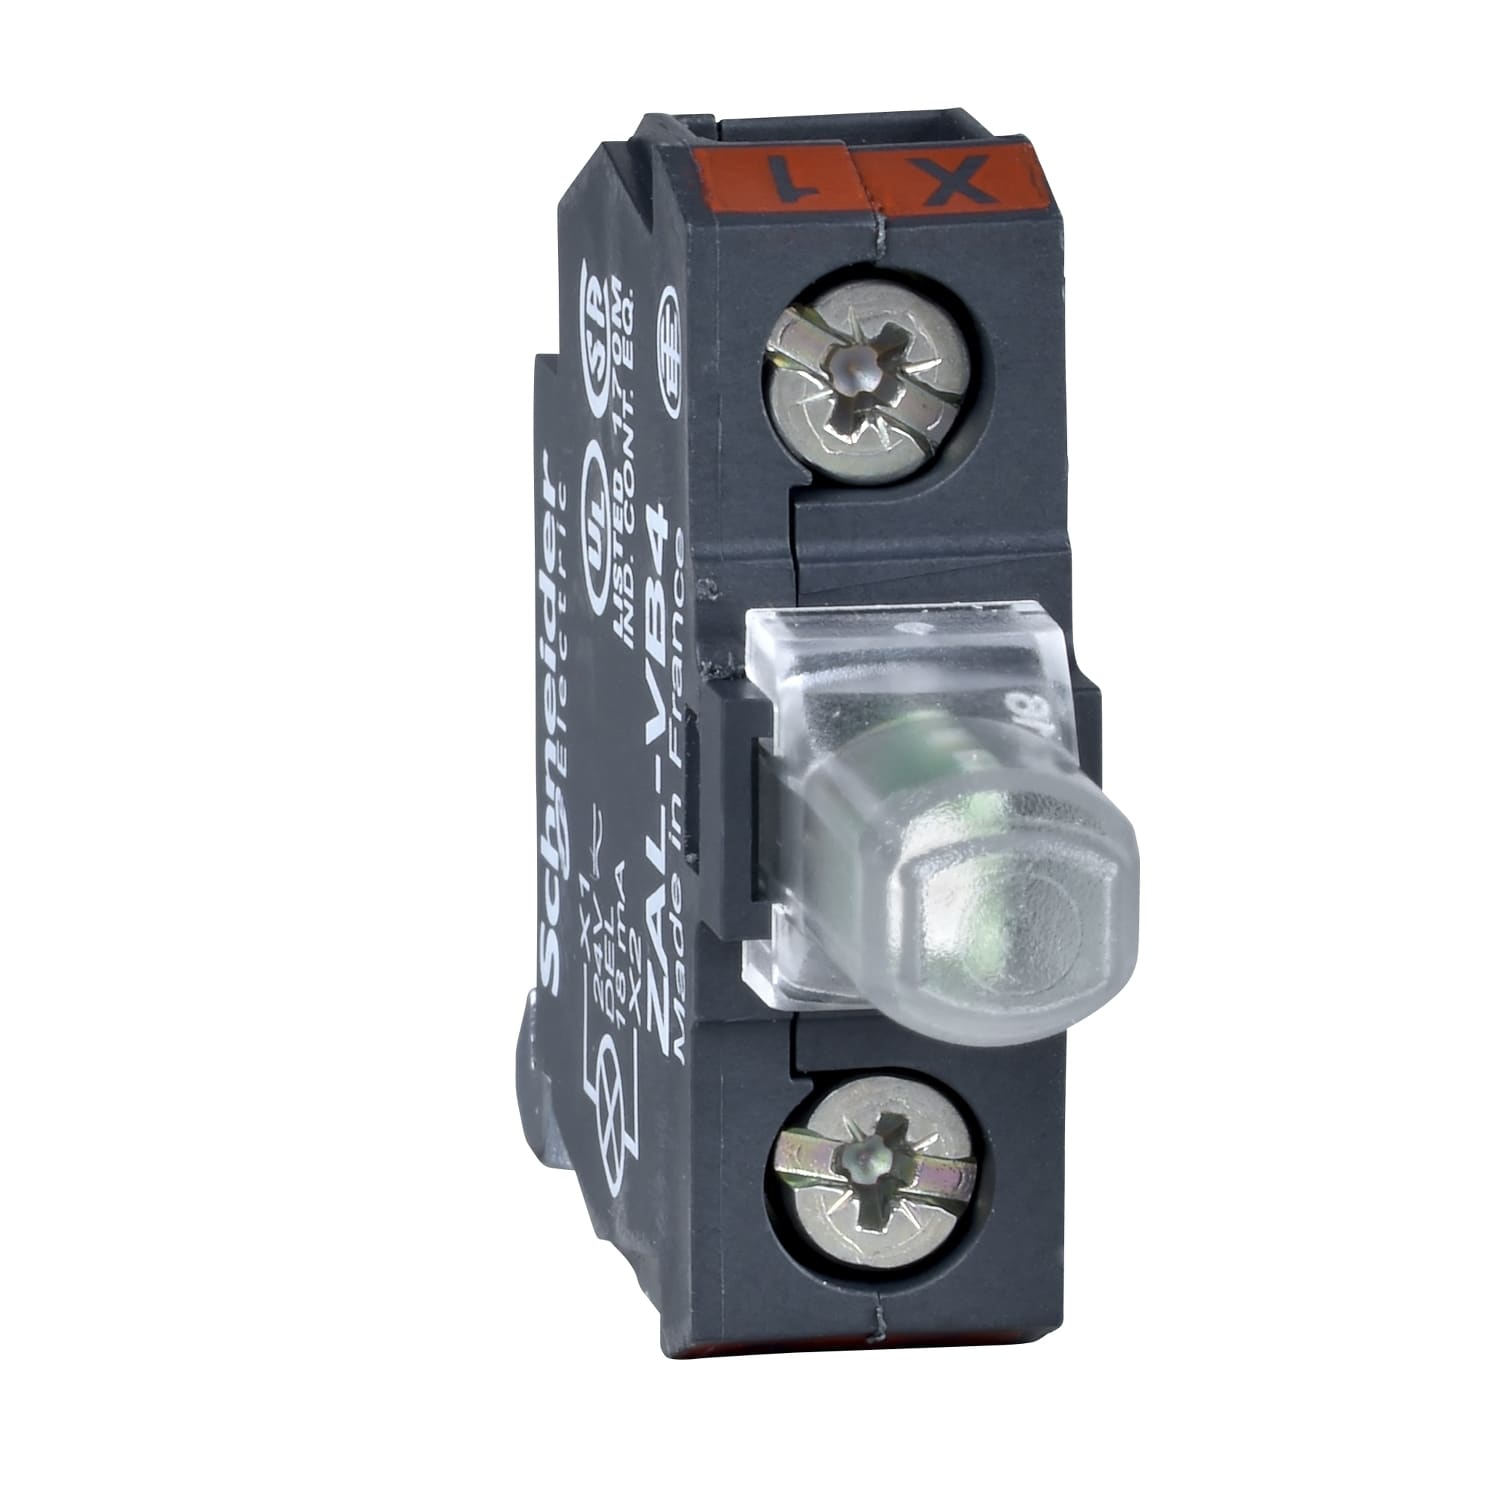 Schneider Electric - Harmony bloc lumineux pour boite a boutons - vert - DEL integree - 24V